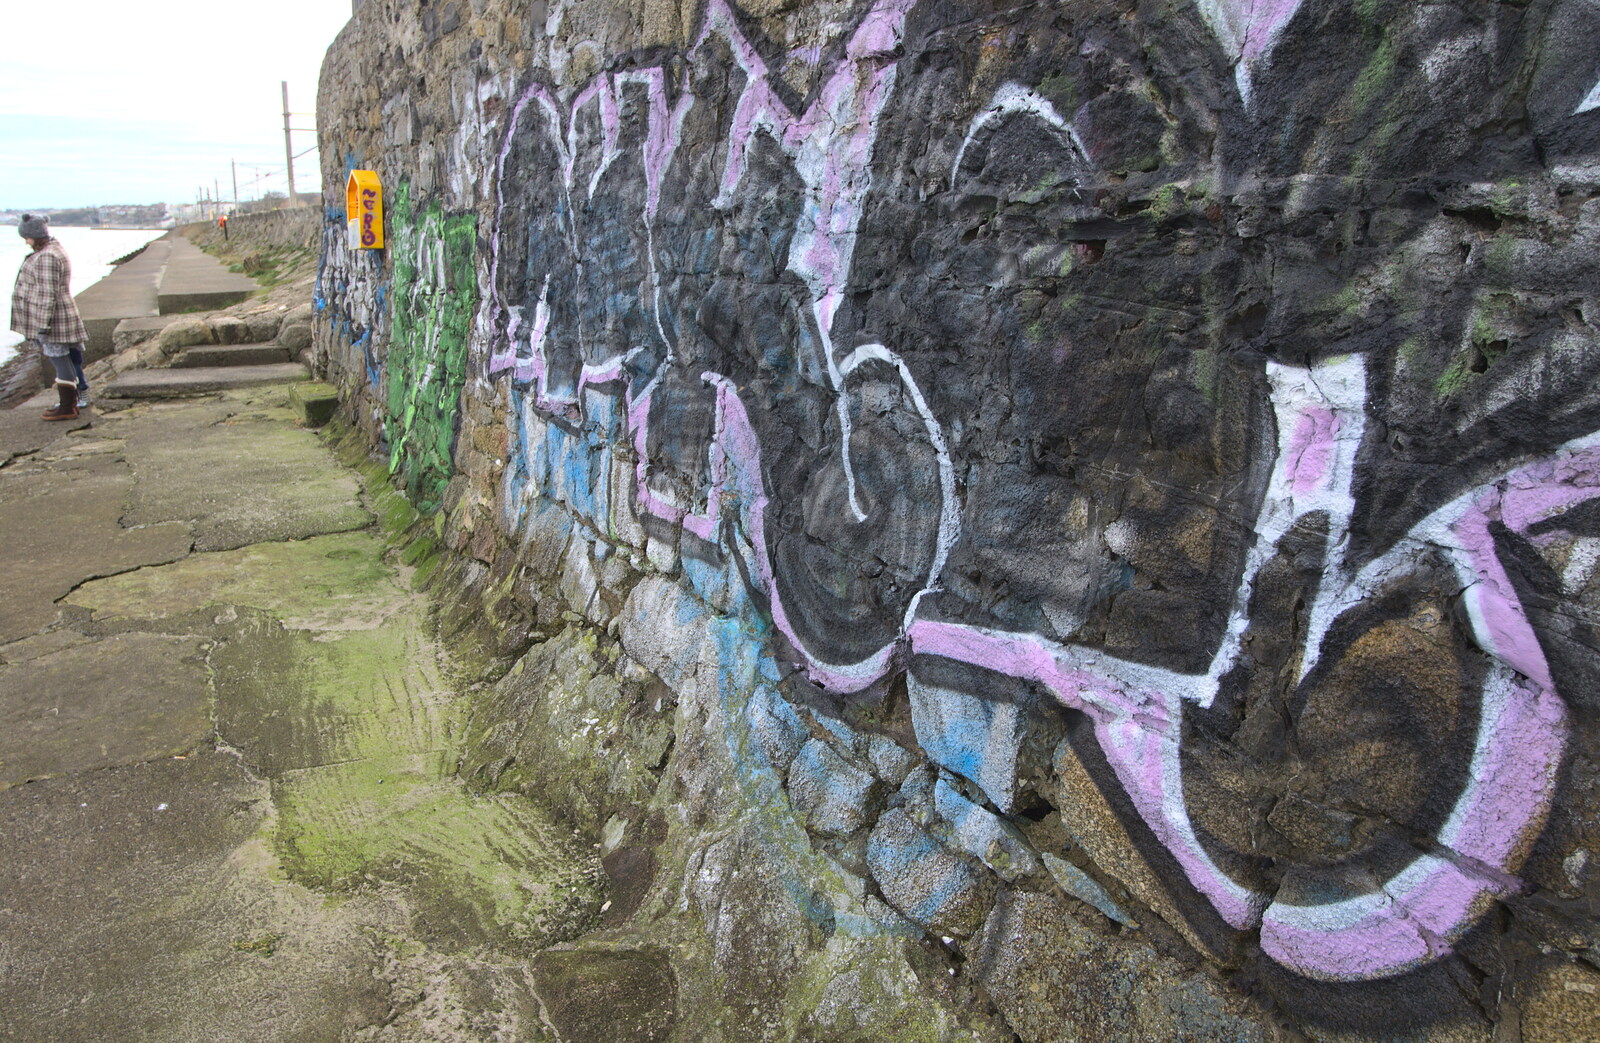 Graffiti on the sea wall from A Morning in Blackrock, County Dublin, Ireland - 8th January 2012